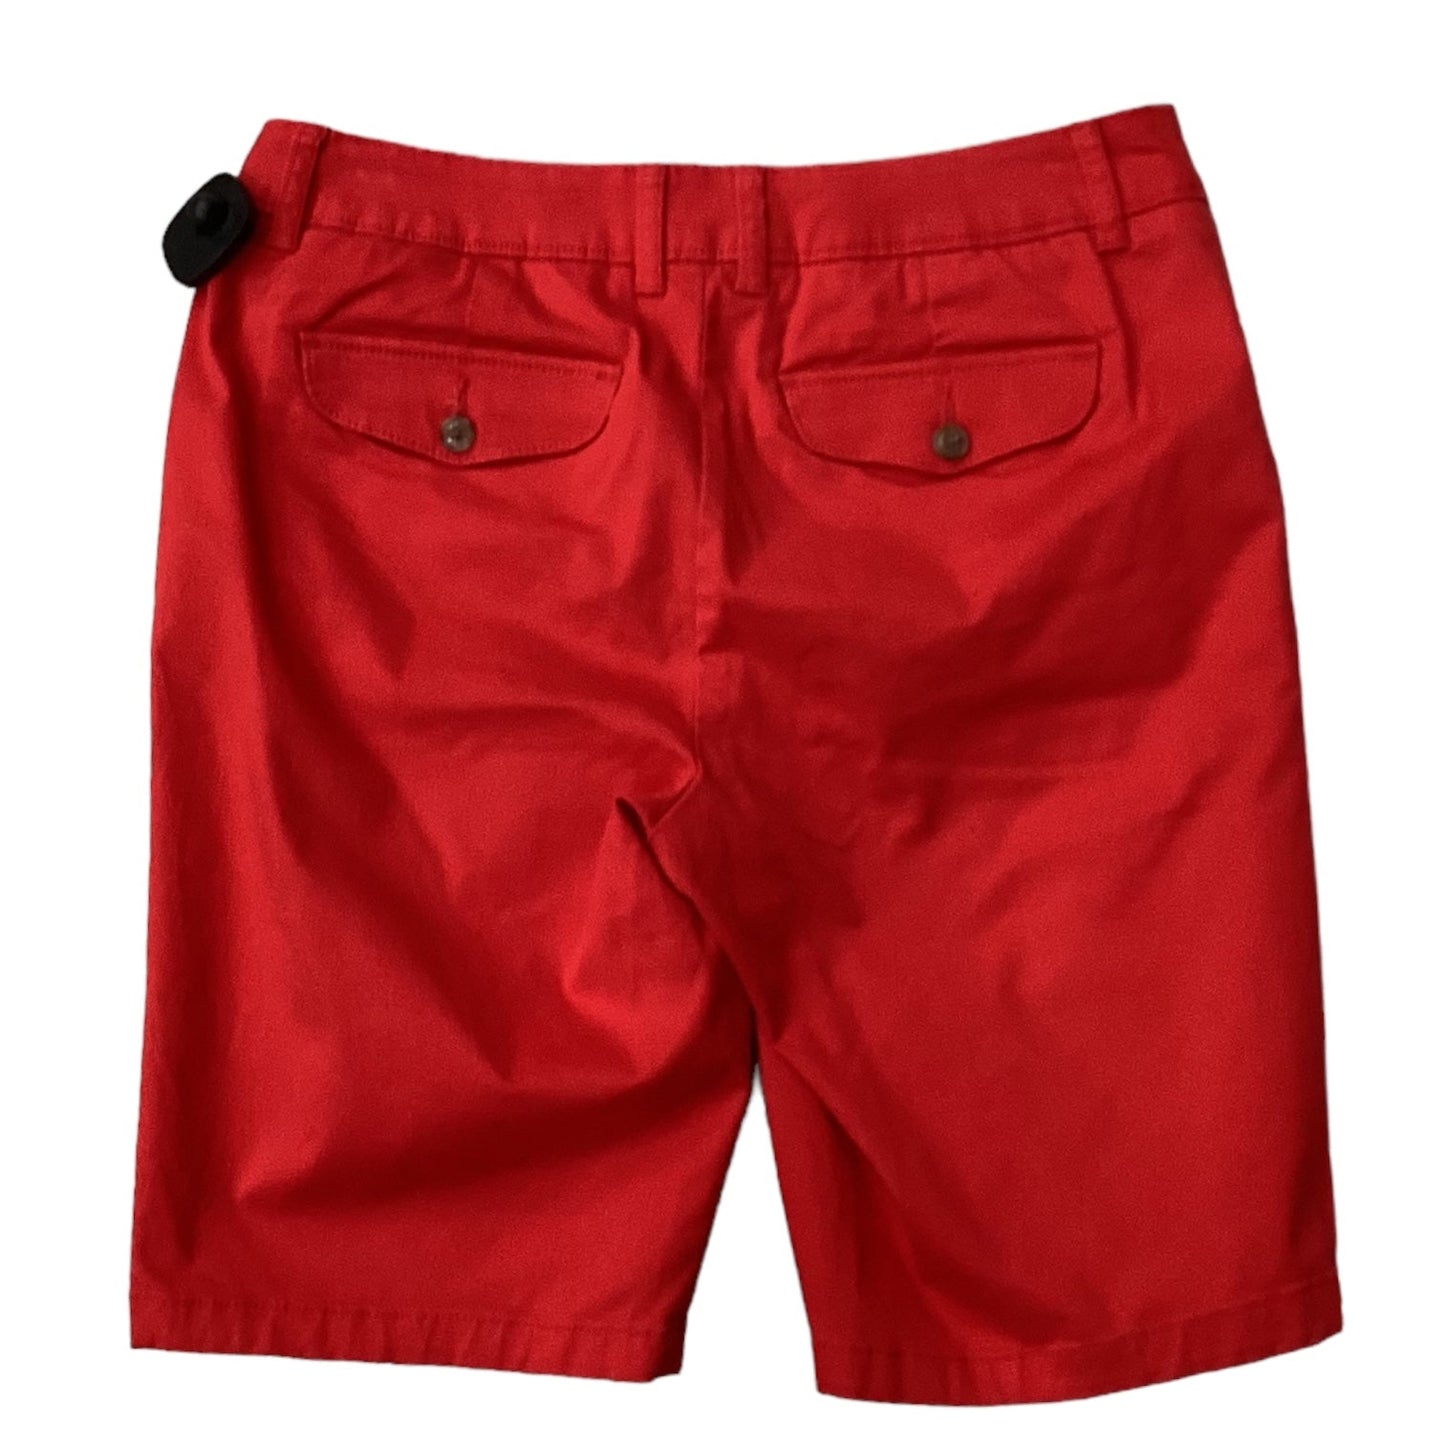 Red Shorts Liz Claiborne, Size 6